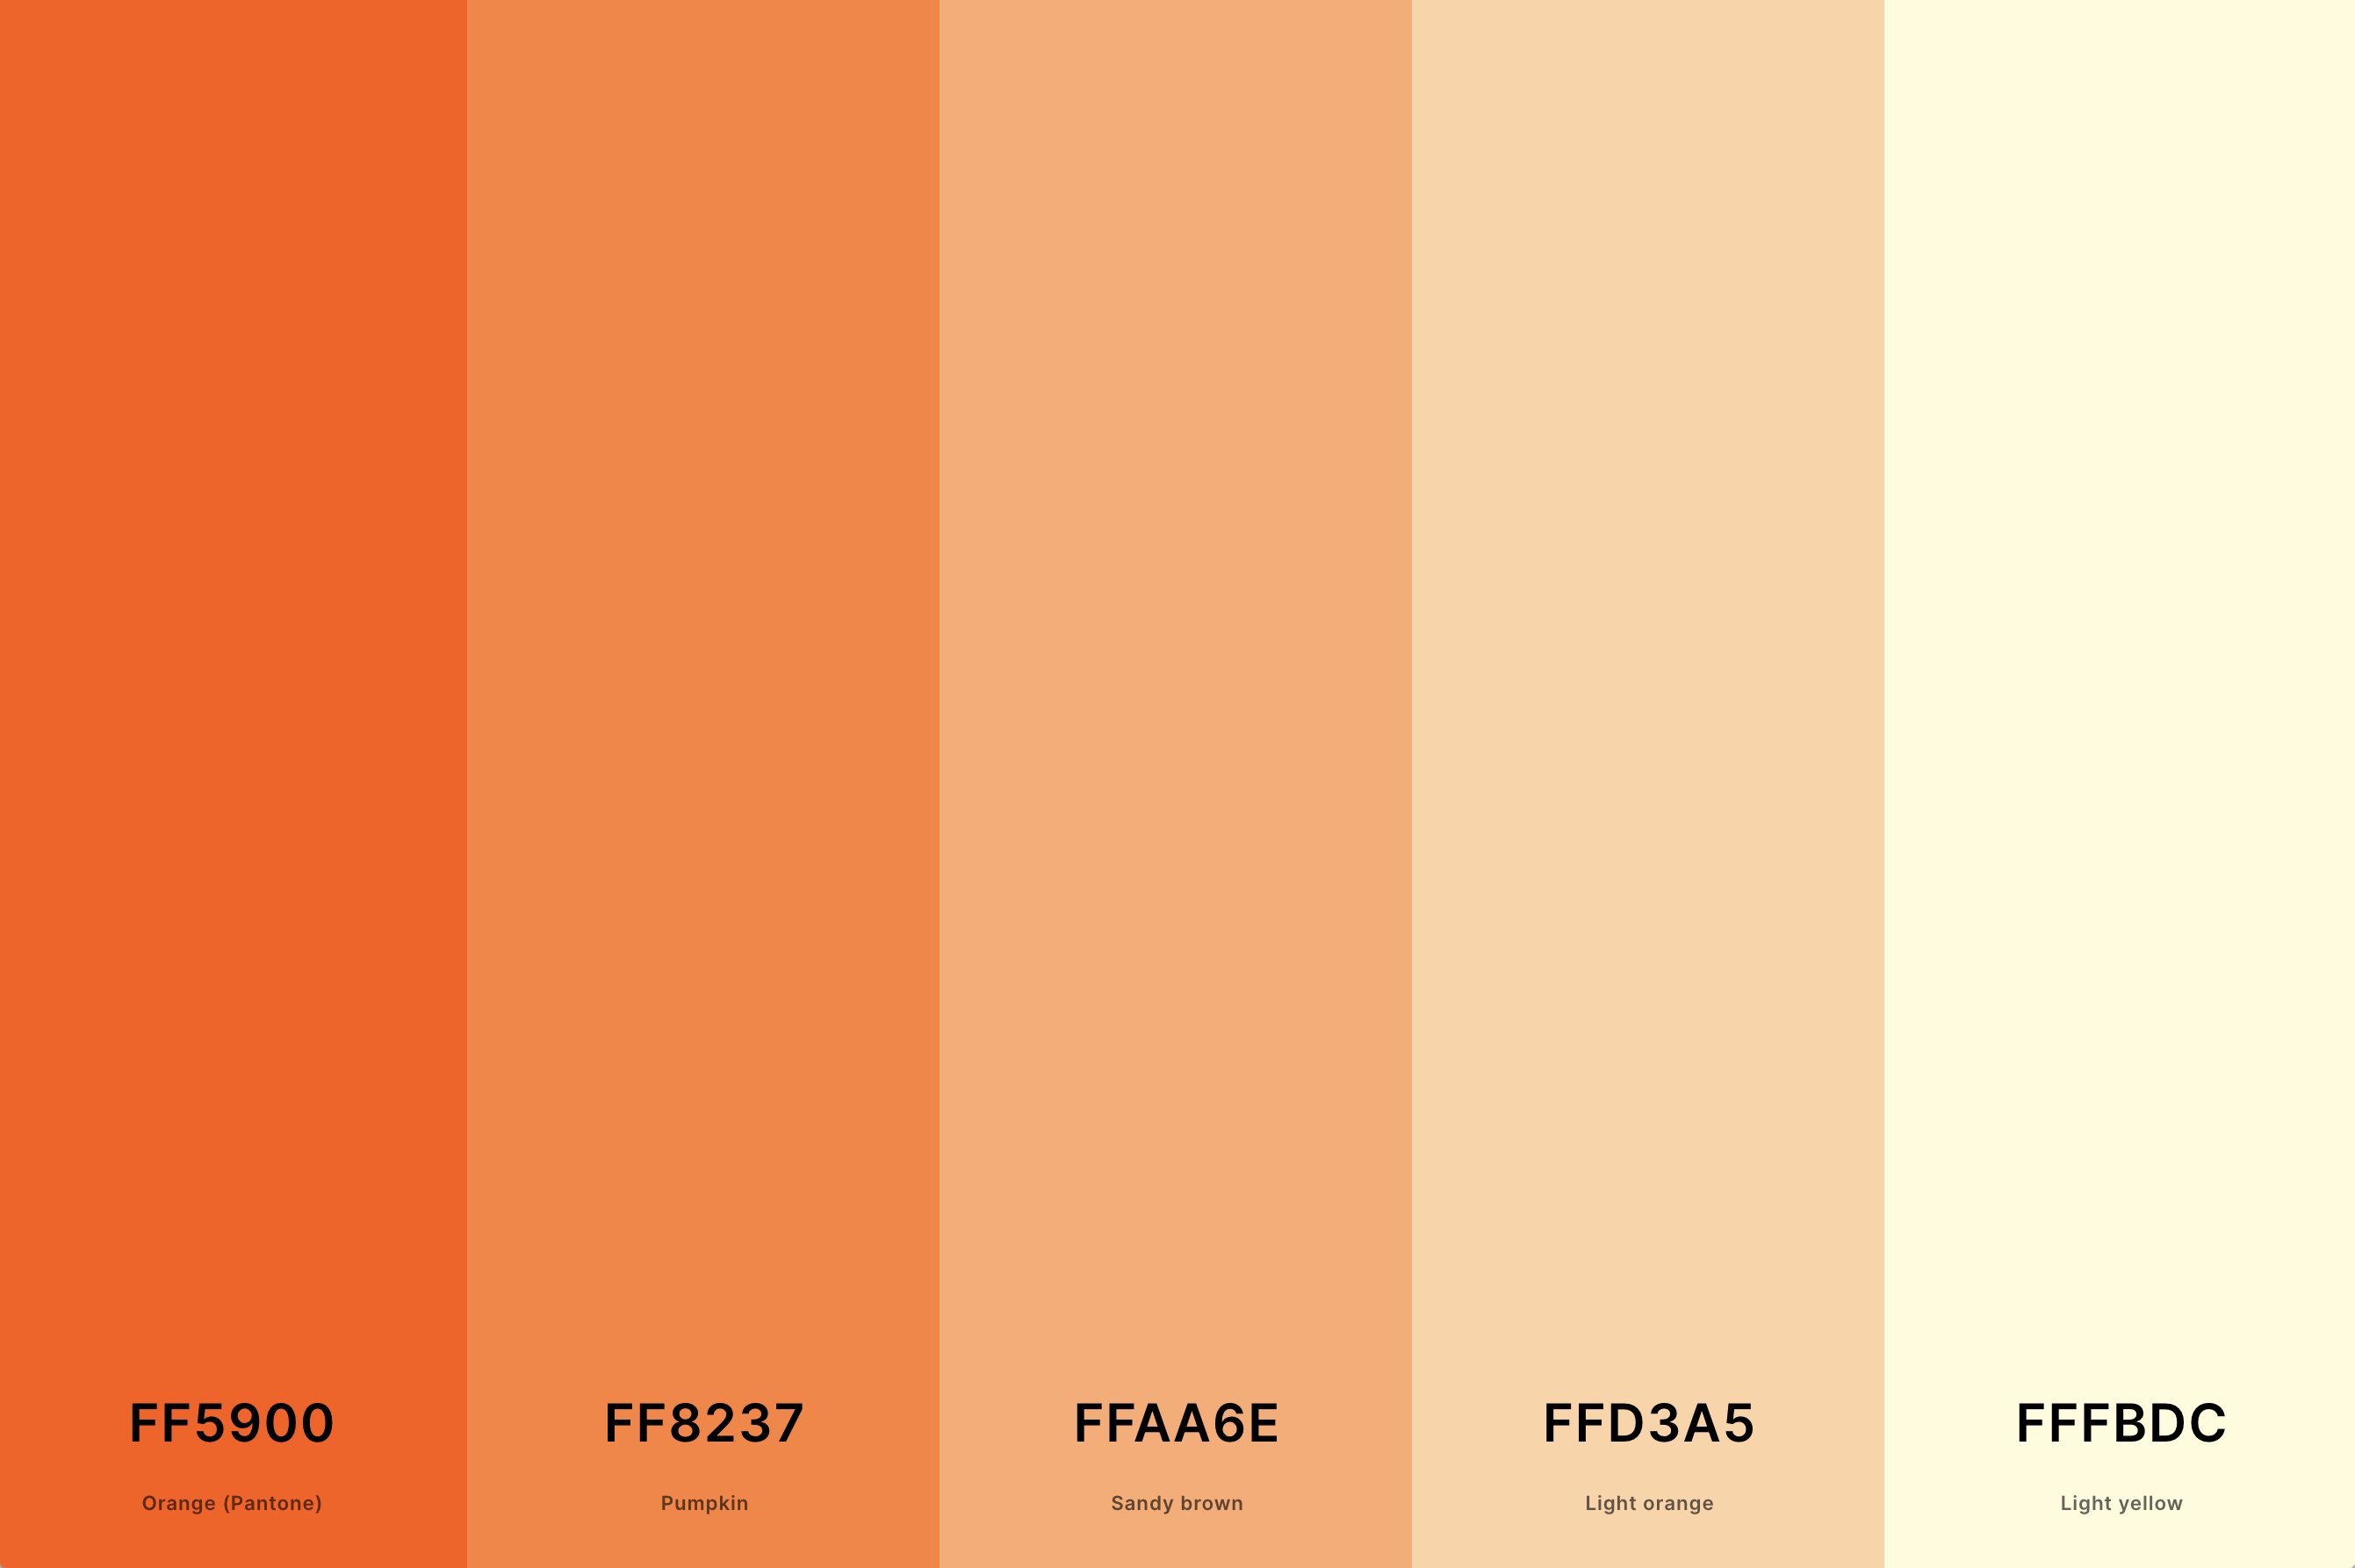 5. Light Orange Color Palette Color Palette with Orange (Pantone) (Hex #FF5900) + Pumpkin (Hex #FF8237) + Sandy Brown (Hex #FFAA6E) + Light Orange (Hex #FFD3A5) + Light Yellow (Hex #FFFBDC) Color Palette with Hex Codes